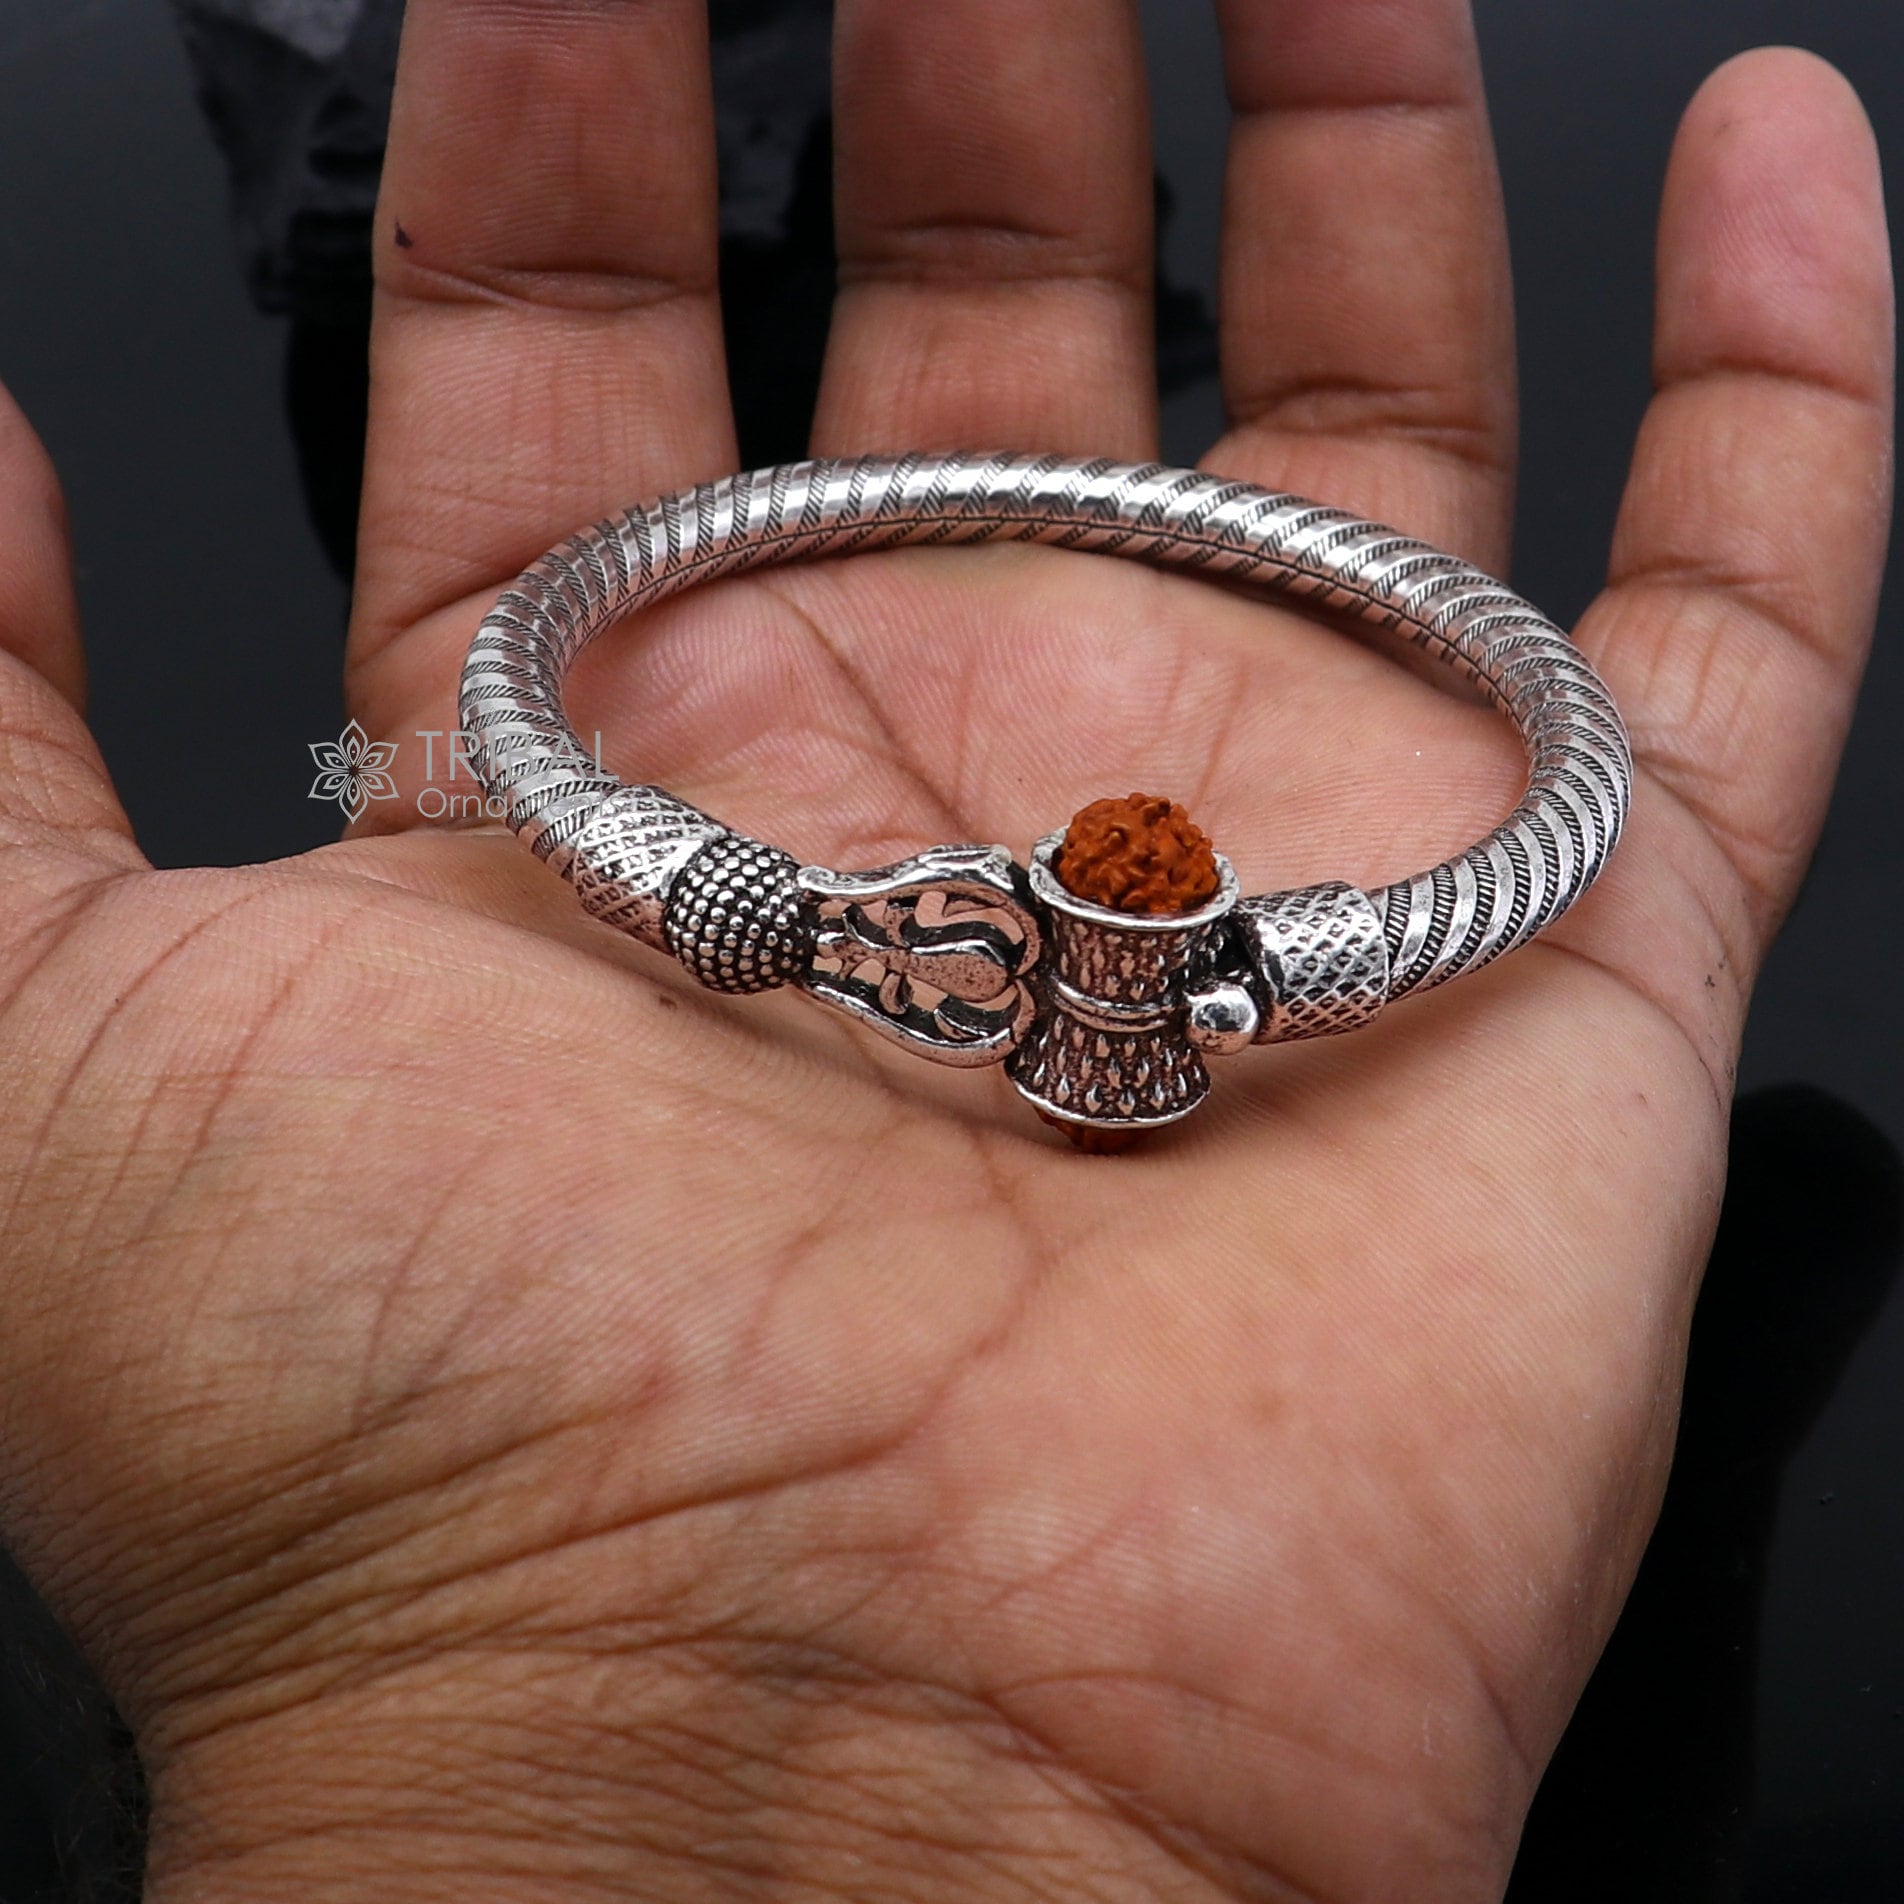 Handmade Sterling silver Lord Shiva Trident Kada Mahakal bracelet, Rudraksh bracelet, customized Babhubali bangle Kada Gifting jewelry nsk703 - TRIBAL ORNAMENTS